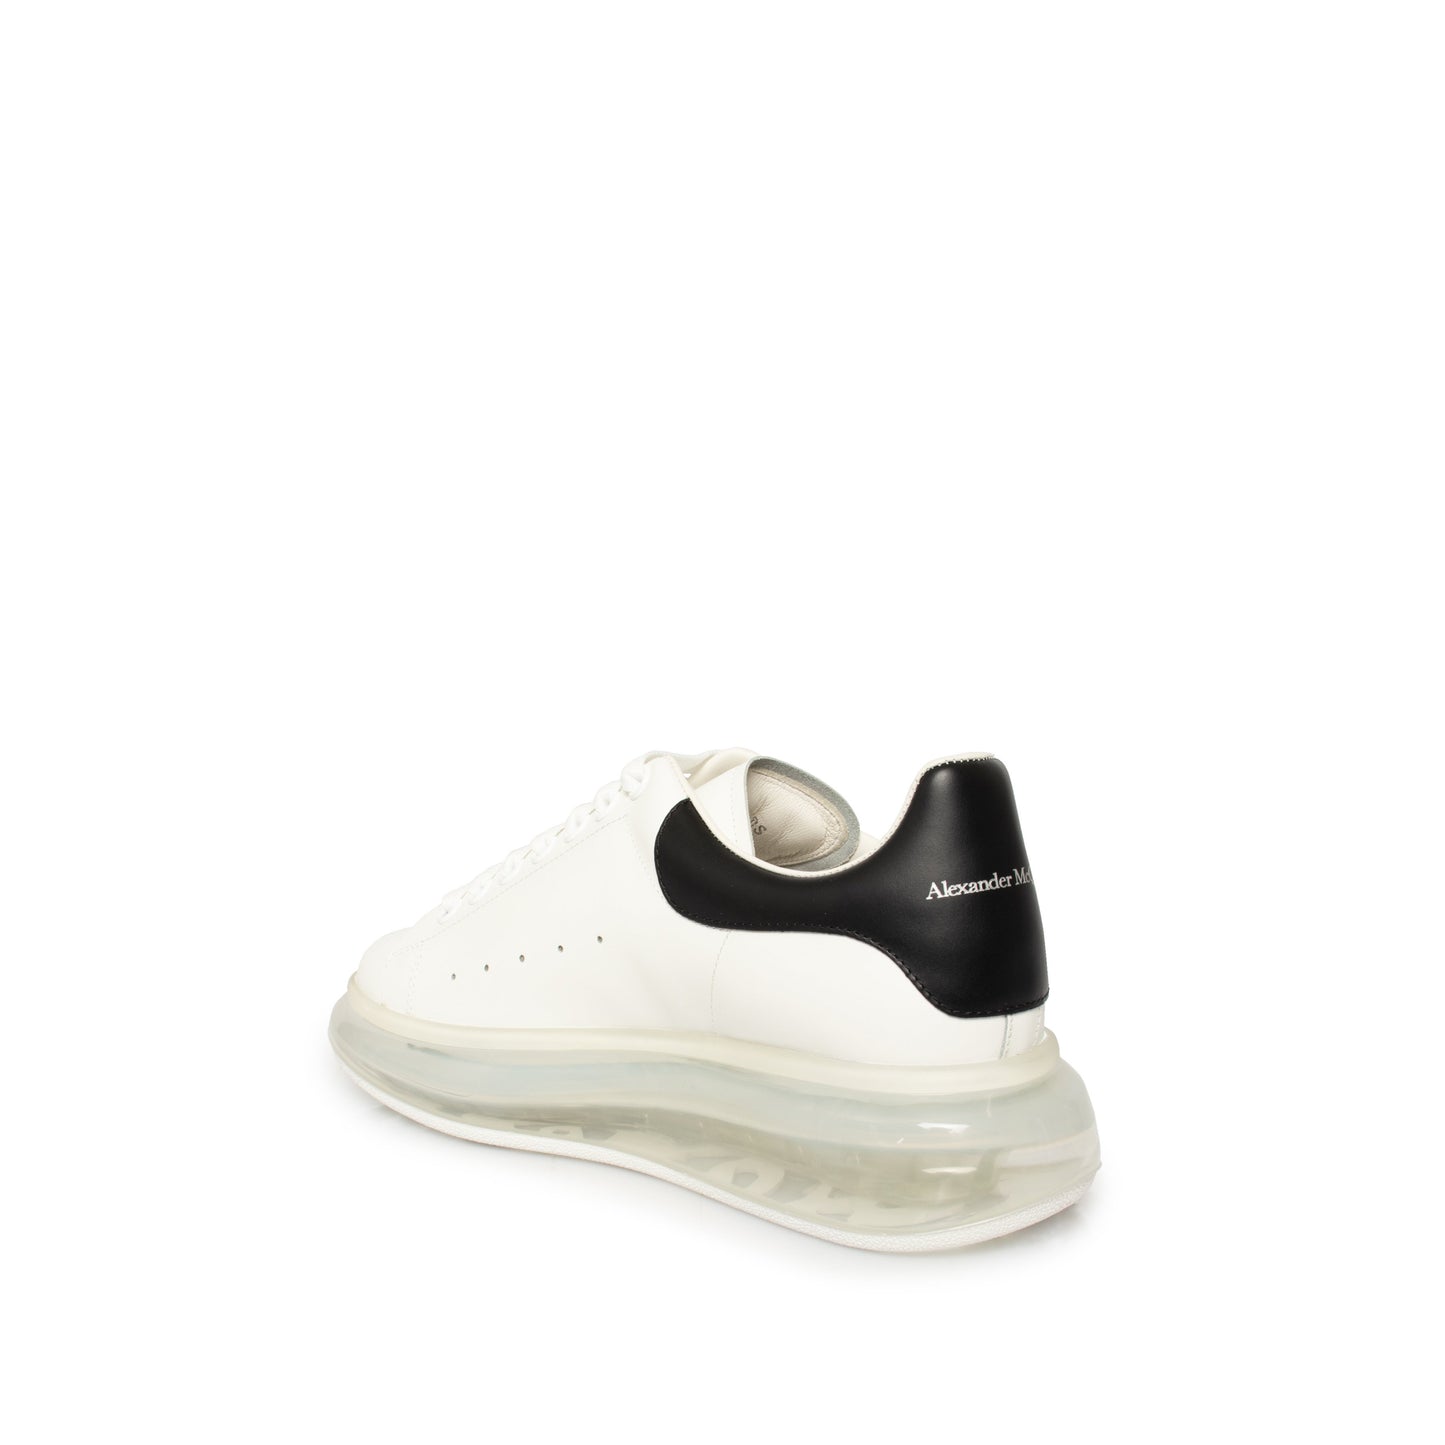 Larry Transparent Sole Sneaker in White/Black